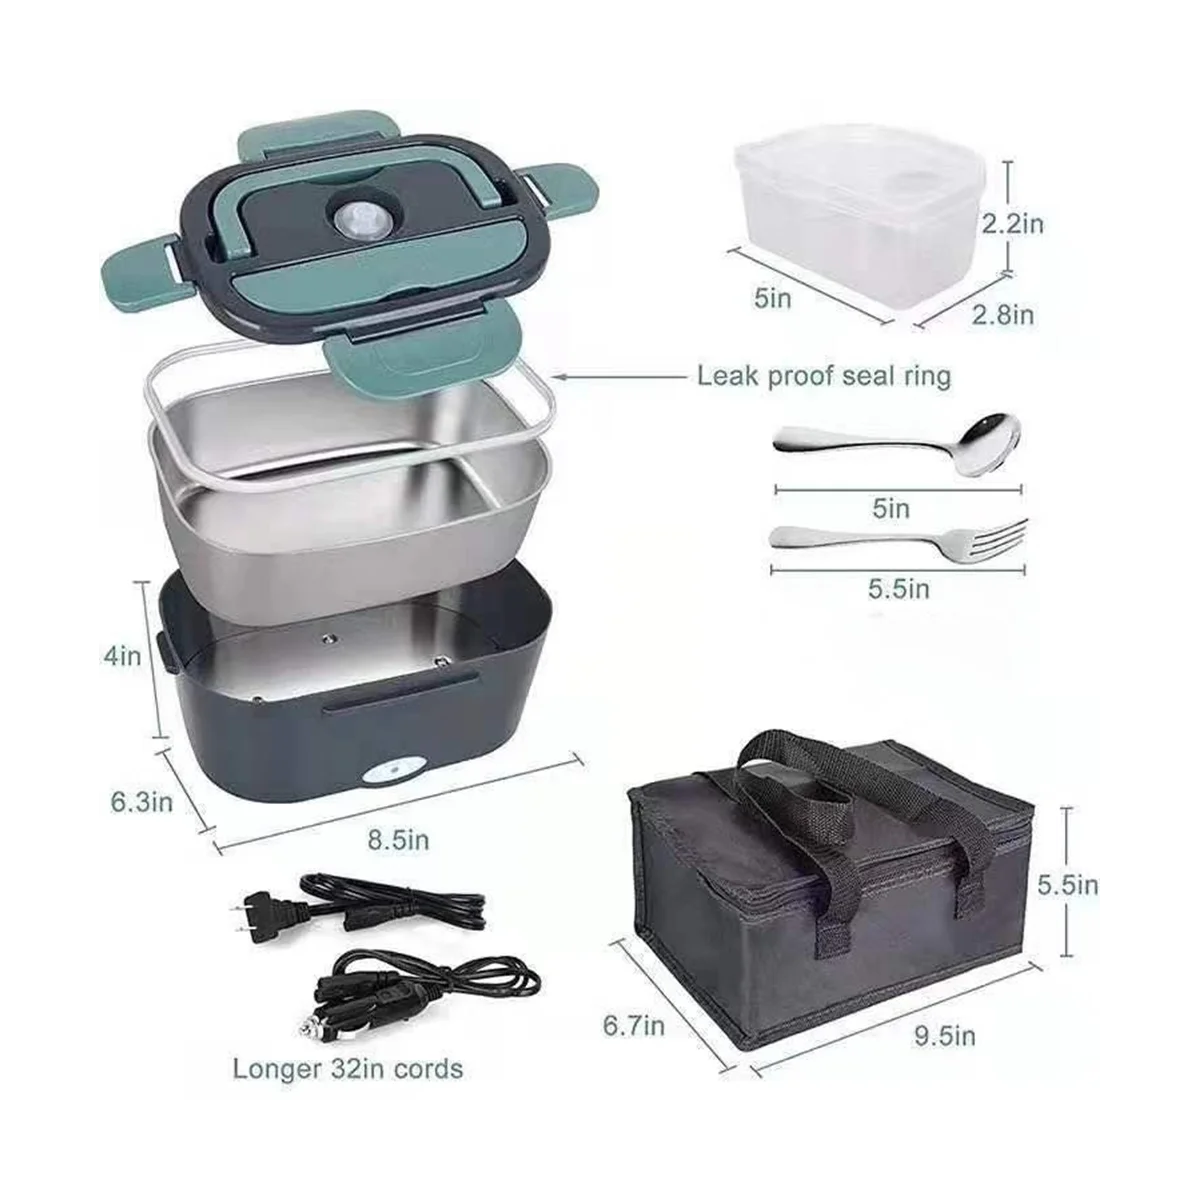 https://ae01.alicdn.com/kf/Sabd7941b93f64b9184a696fe4f11ef66V/Electric-Lunch-Box-40W-Portable-Lunch-Warmer-Food-Warmer-Adult-Car-Fast-Heating-Lunch-Box-with.jpg